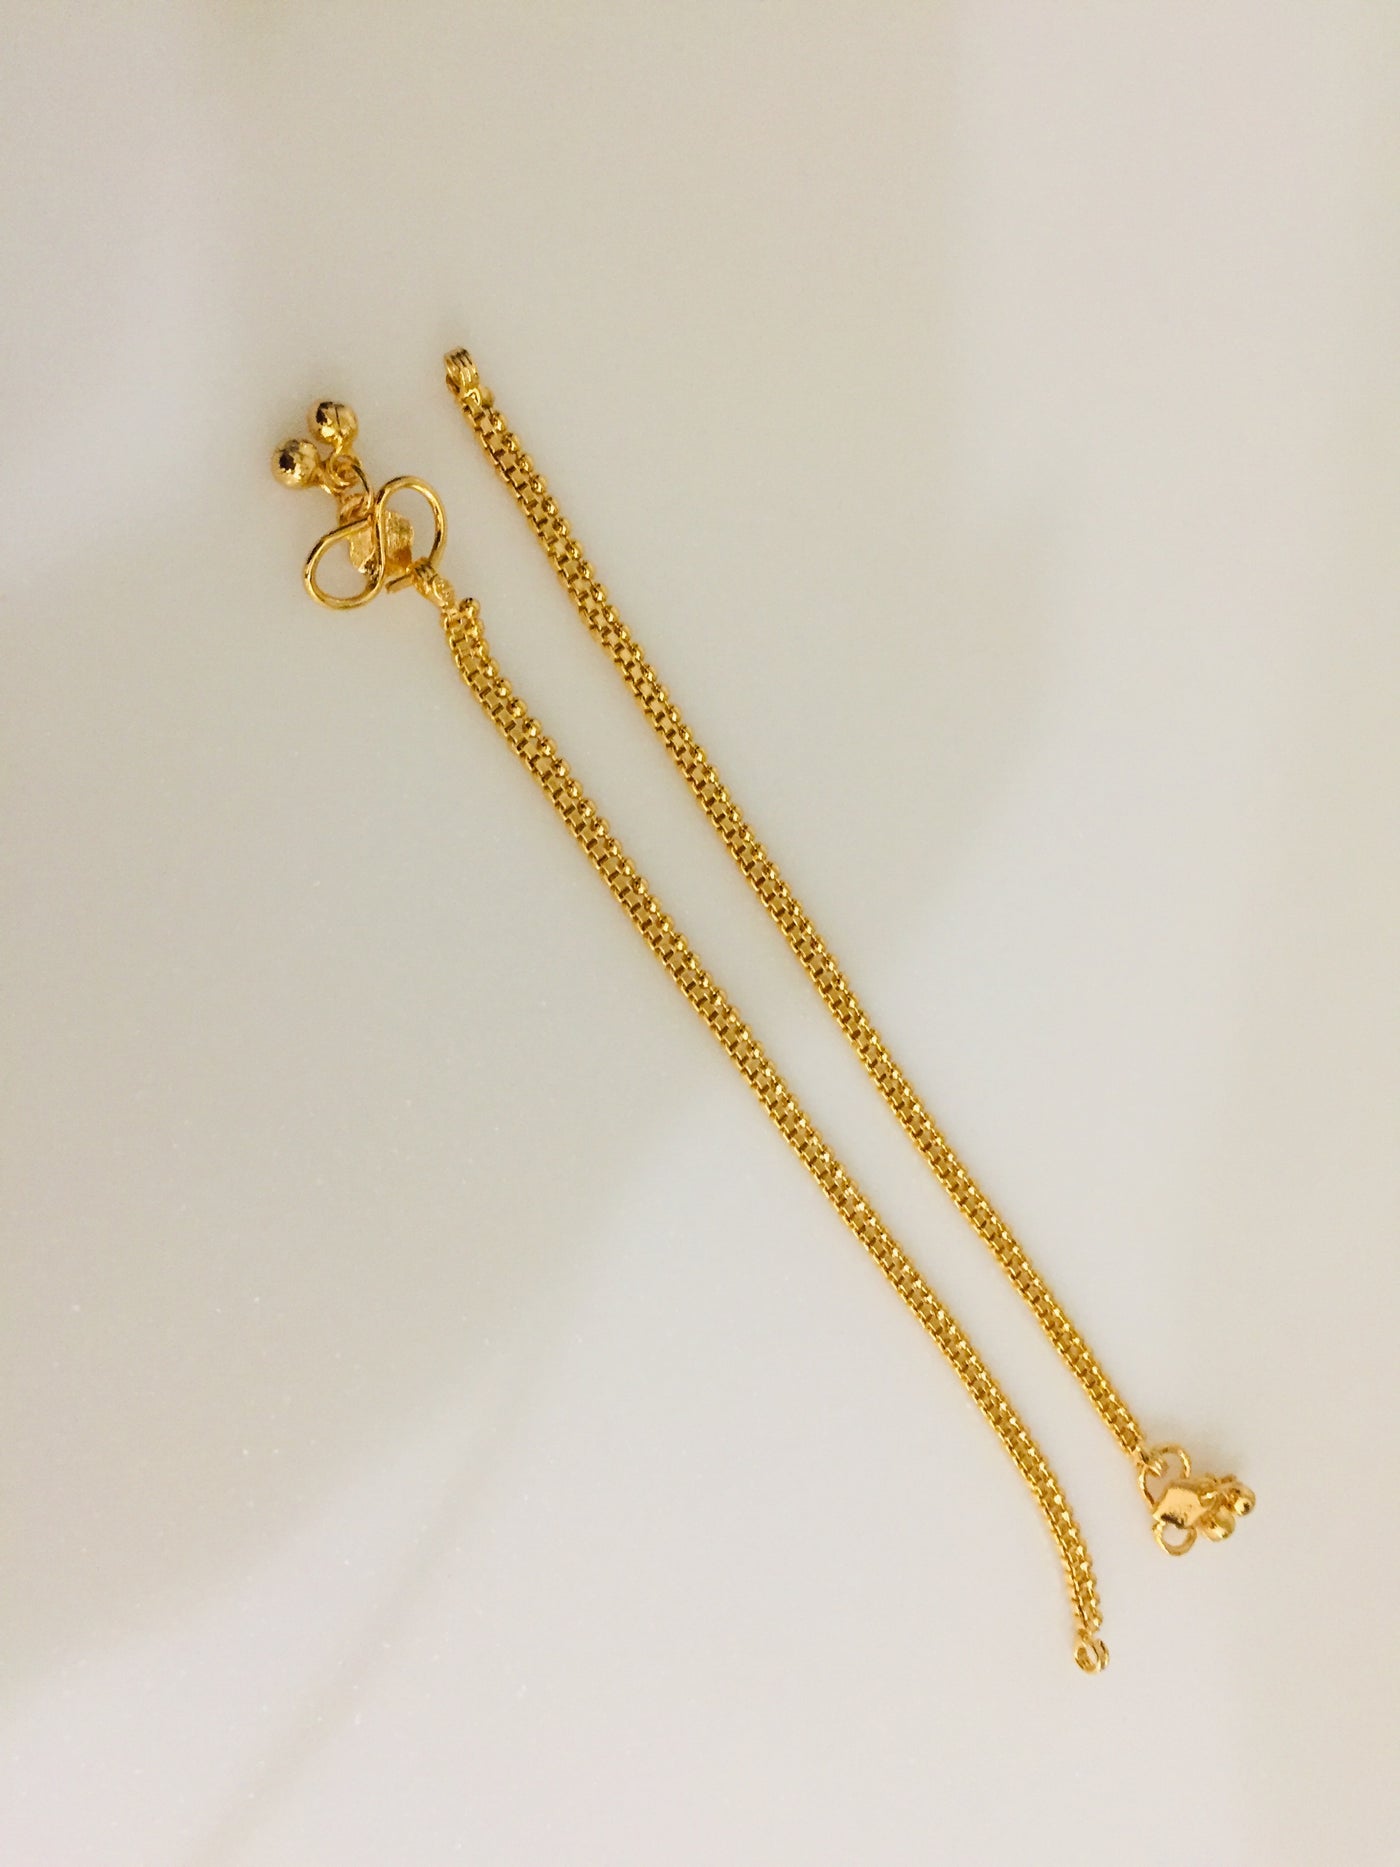 1 Gram Gold Anklets/Ankle Bracelets - Sakkhi Style